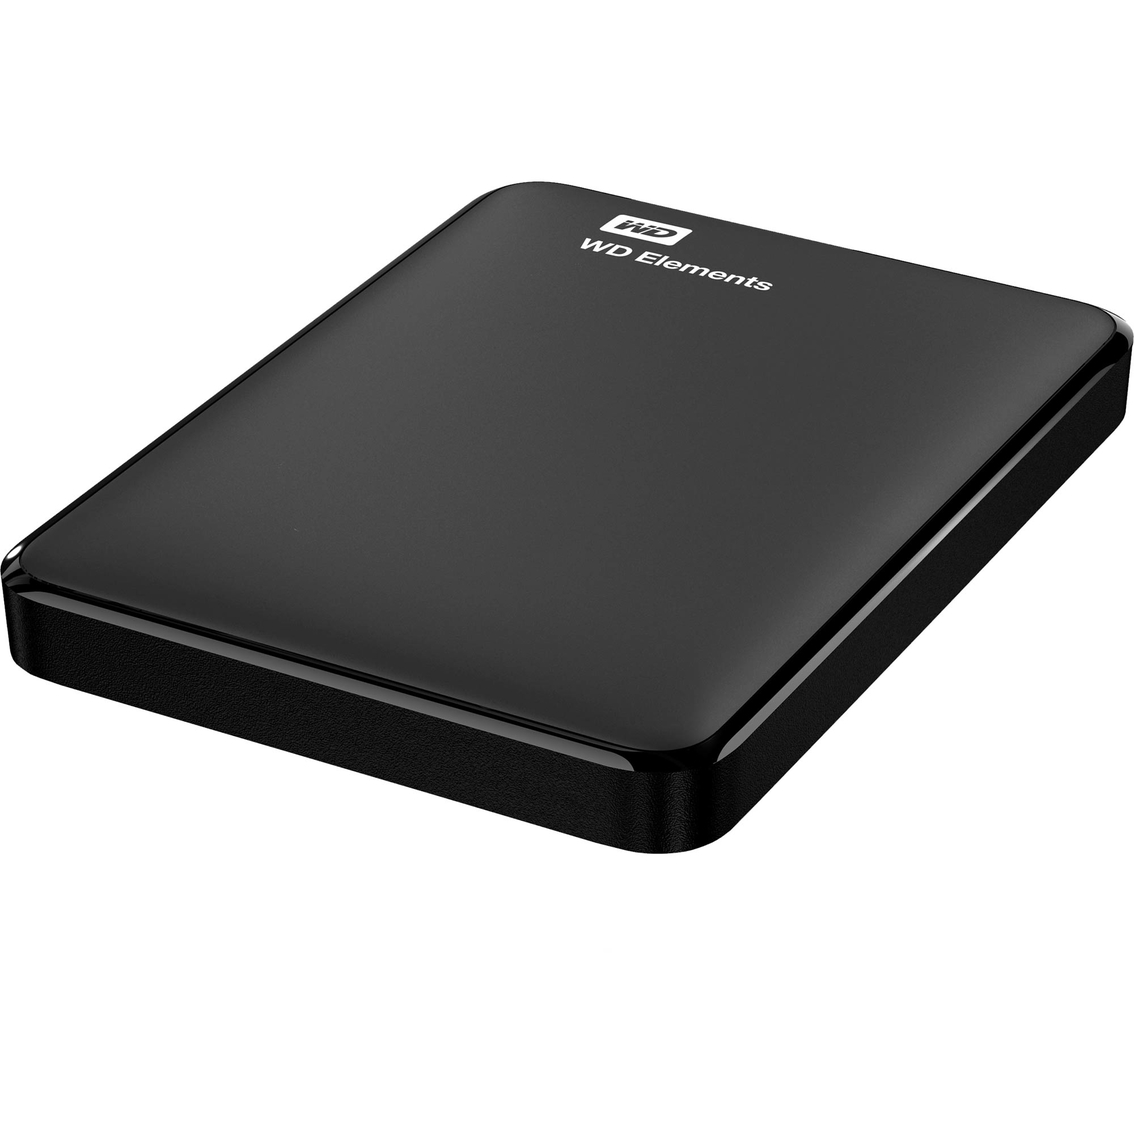 Western Digital Elements 1tb Portable Storage Drive, Hard Drives & Backup, Electronics